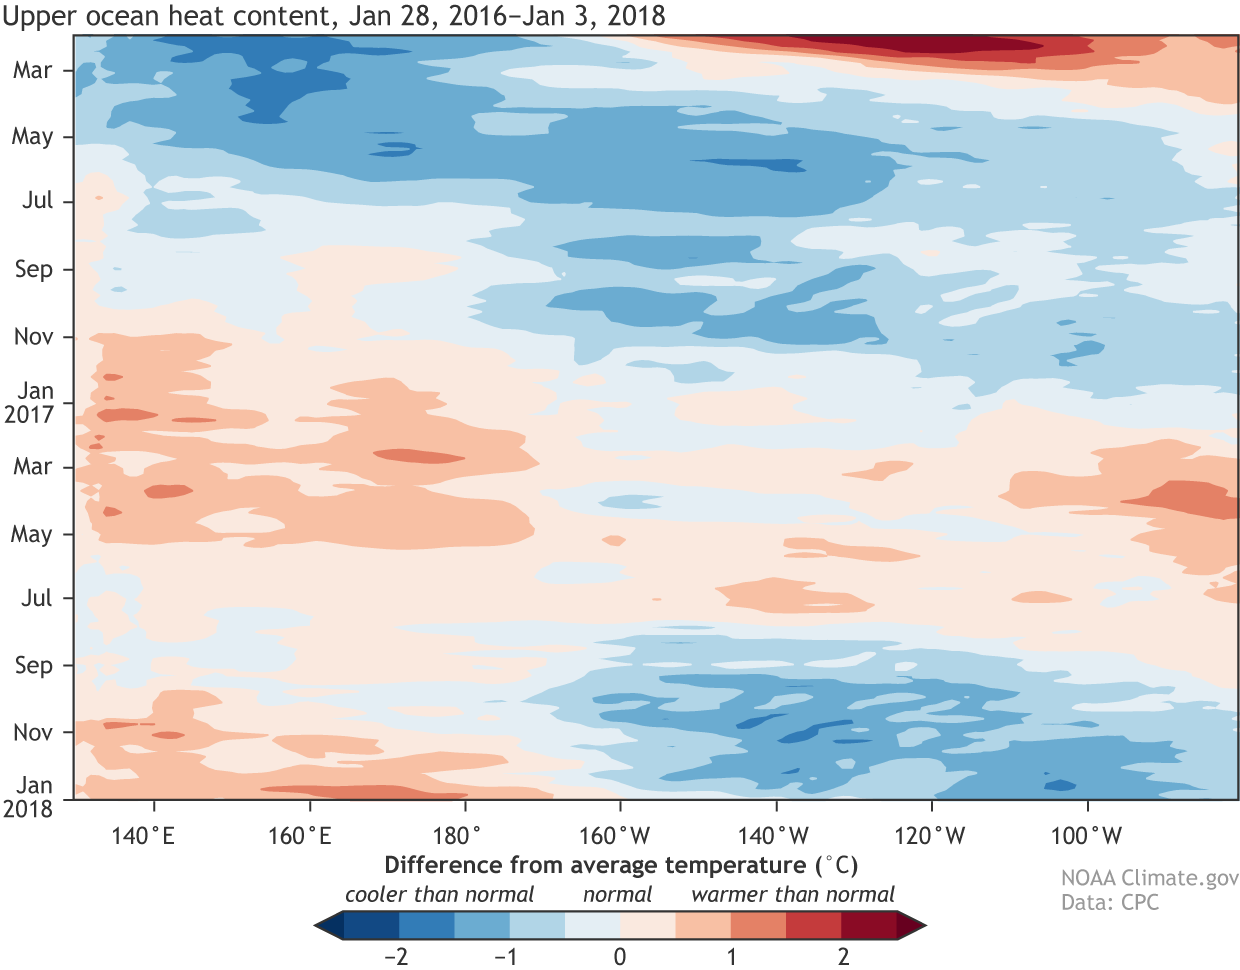 Wärmegehalt des oberen Ozeans (28. Januar 2016 - 3. Januar 2018)